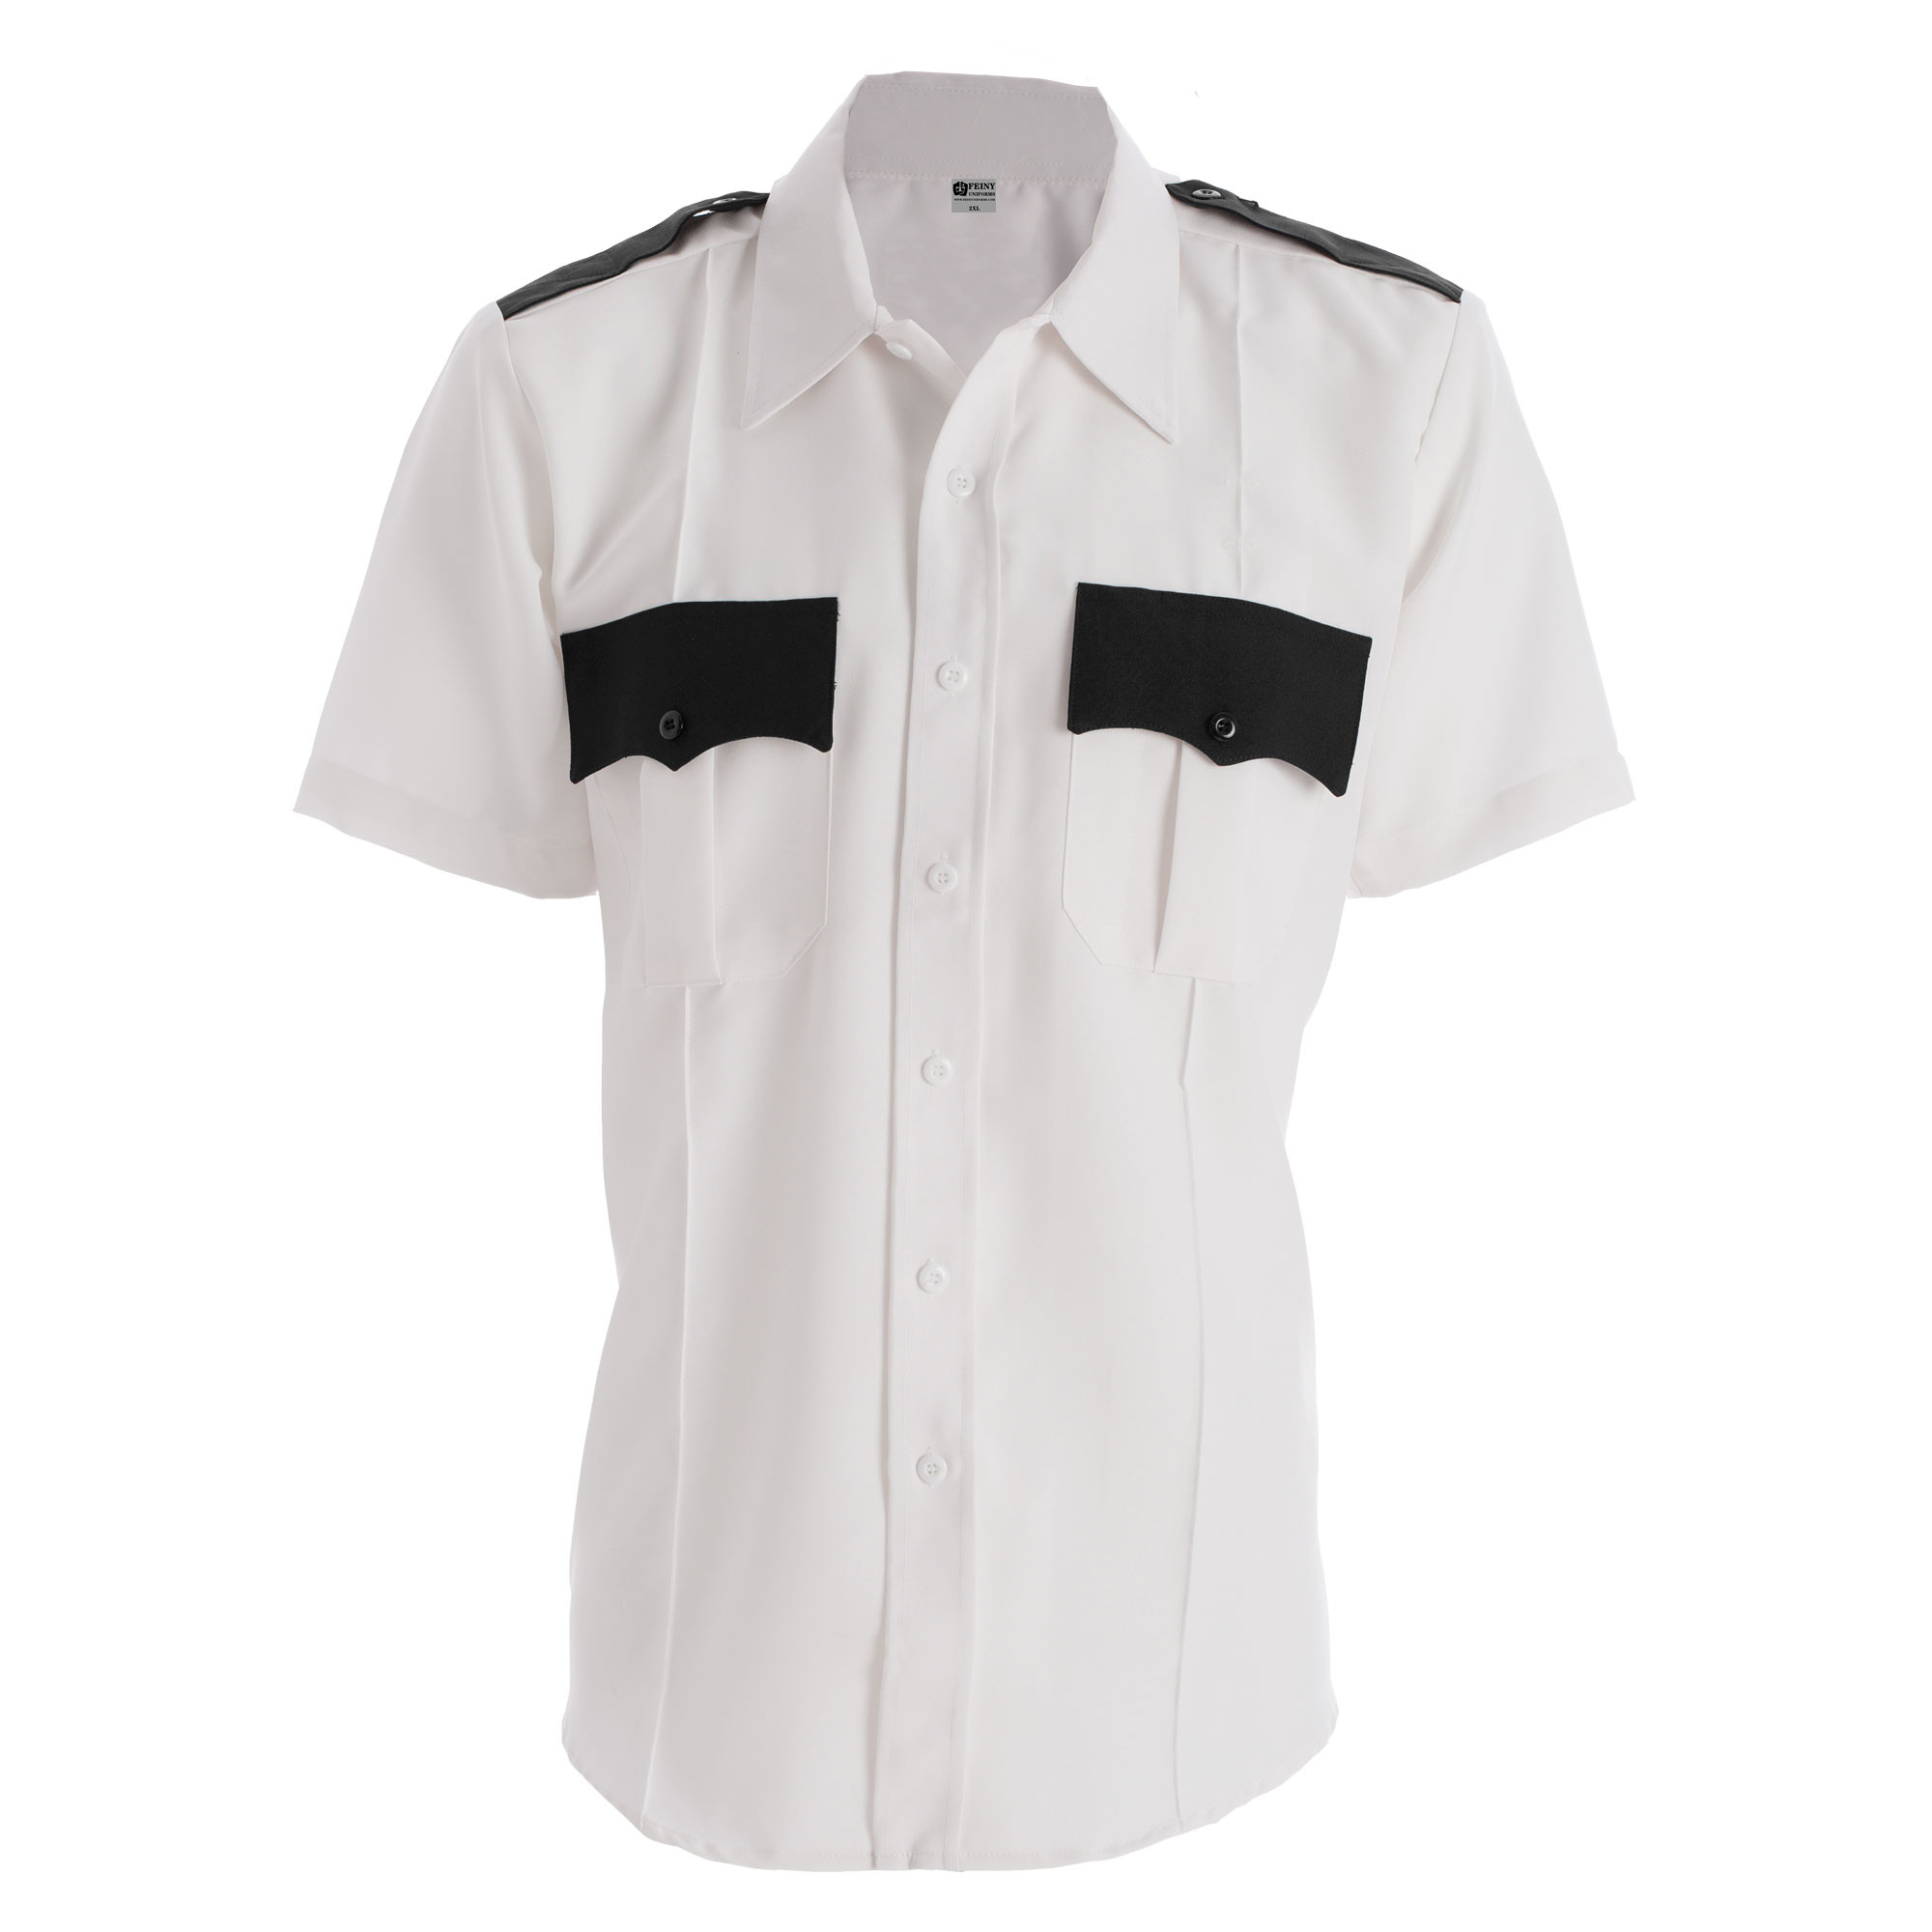 China Feiny Polyester Short Sleeve Two Tone Officer Uniform Shirts